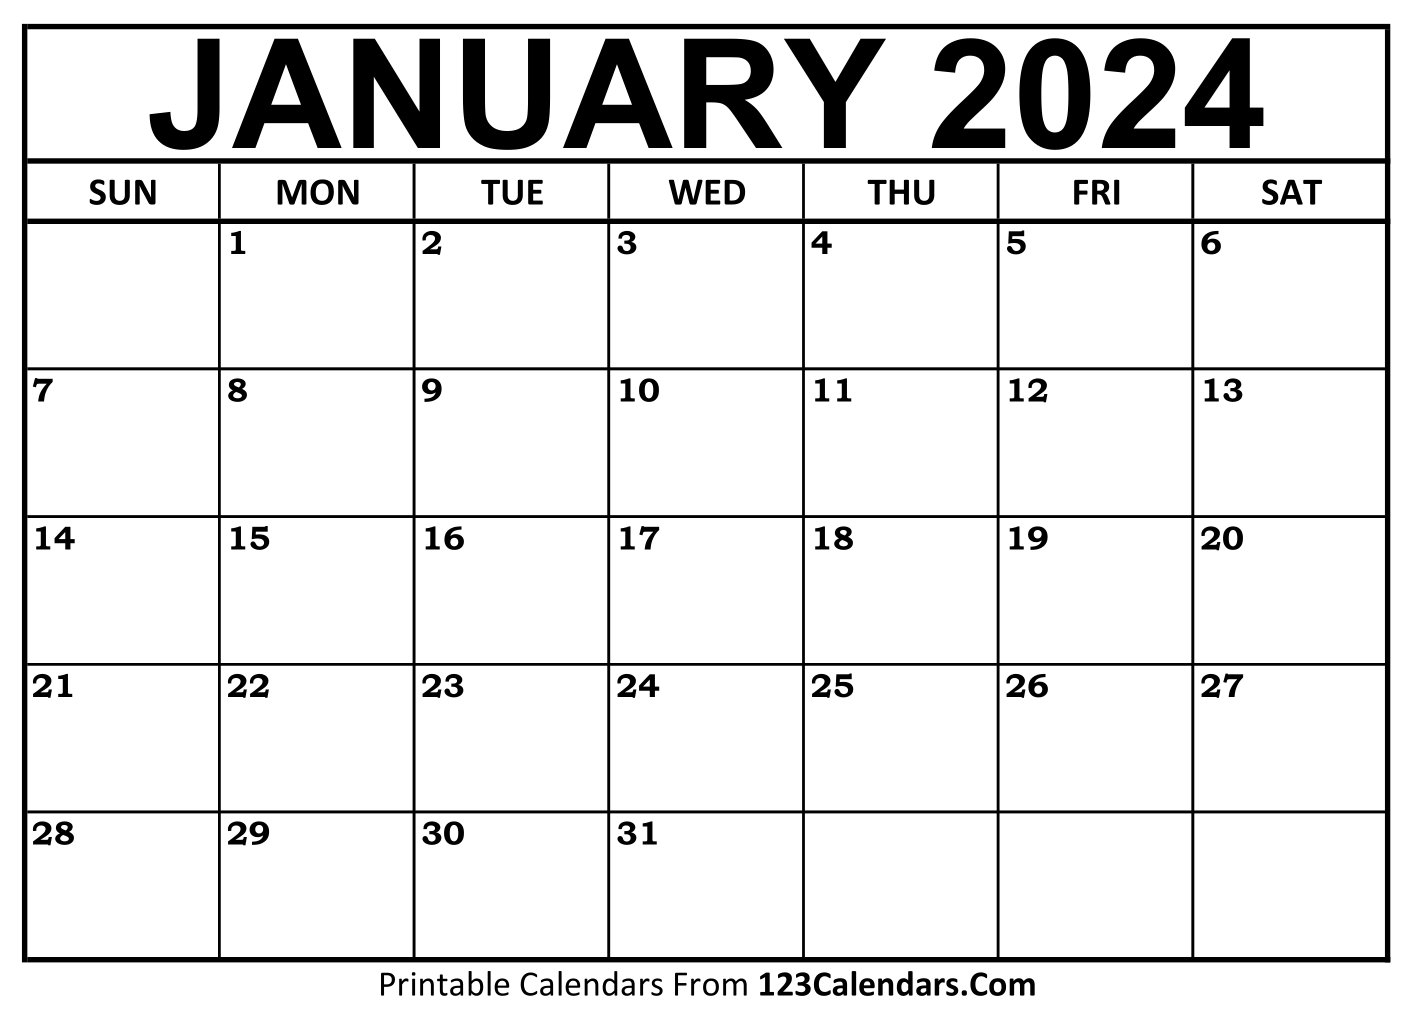 Printable January 2024 Calendar Templates - 123Calendars for Jan 2024 Calendar Printable Free